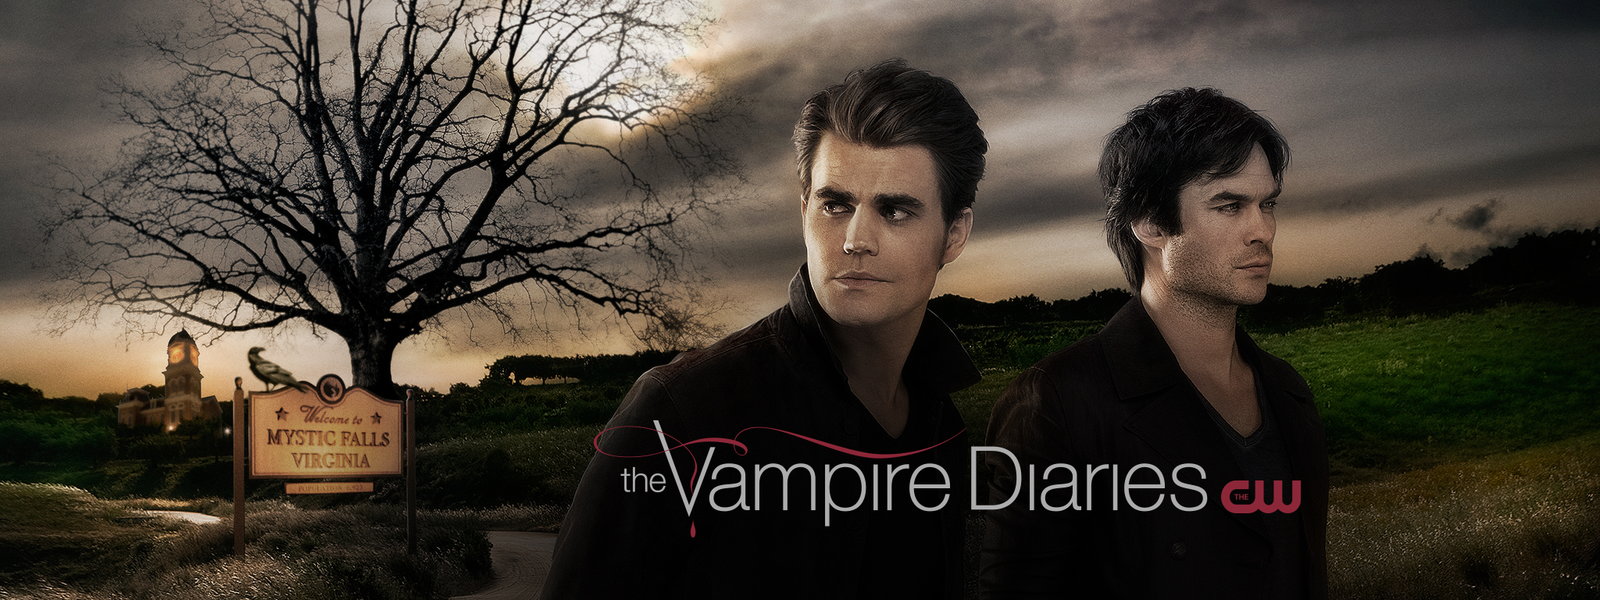 the vampire diaries season 6 episode 1 putlockers